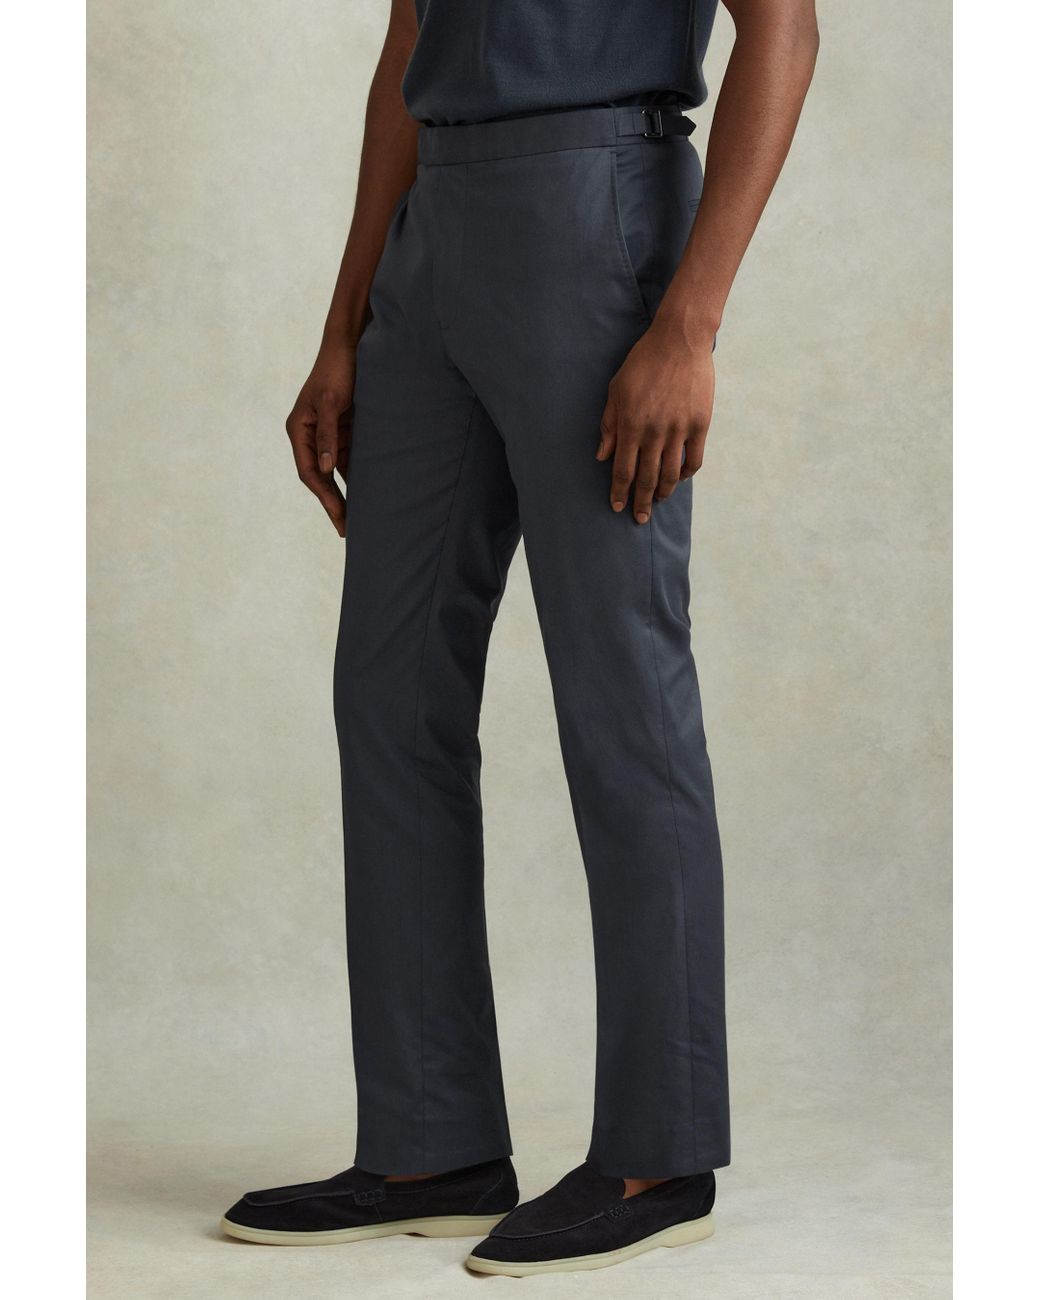 https://cdna.lystit.com/1040/1300/n/photos/reiss/a9ca7f7c/reiss-Airforce-Blue-Crawford-Airforce-Blue-Slim-Fit-Cotton-Blend-Adjuster-Trousers.jpeg